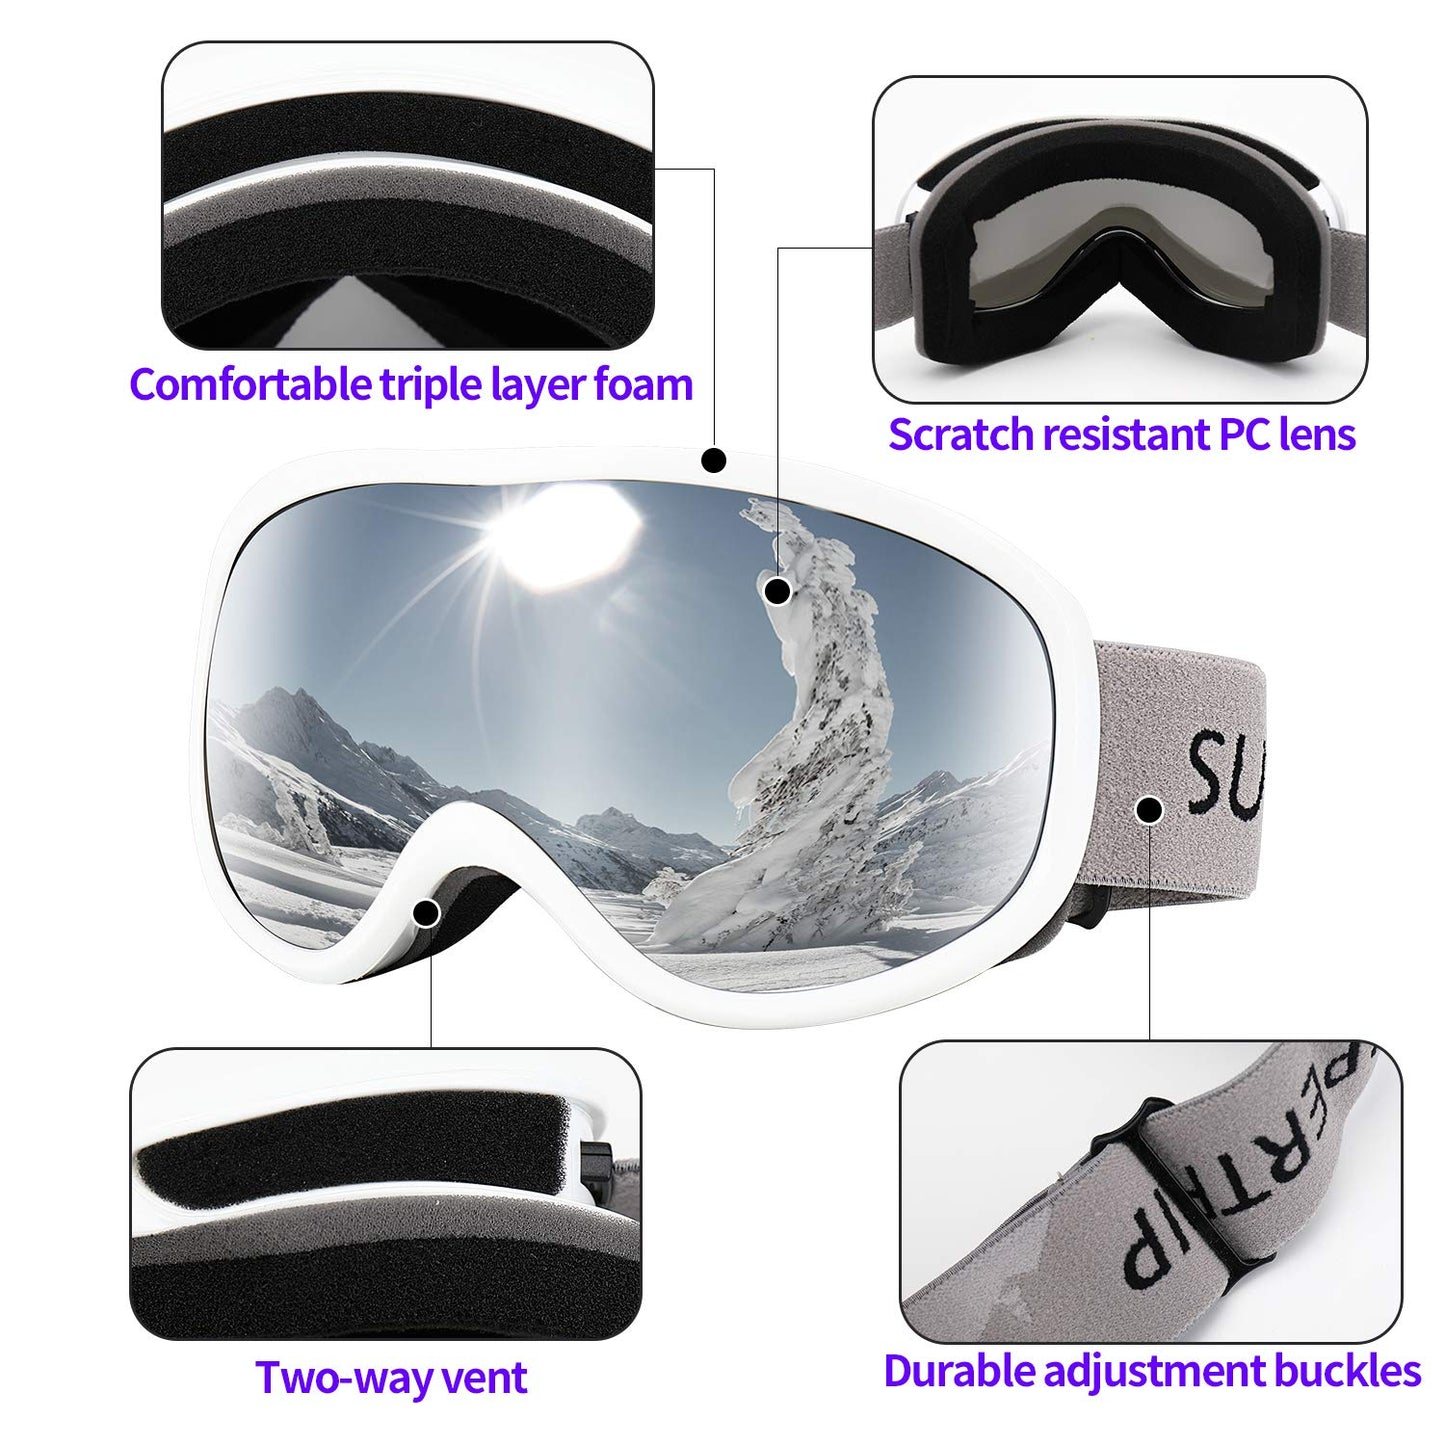 Supertrip Snow Ski Goggles Anti-Fog 100% UV Protection Snowboard Skiing Goggles